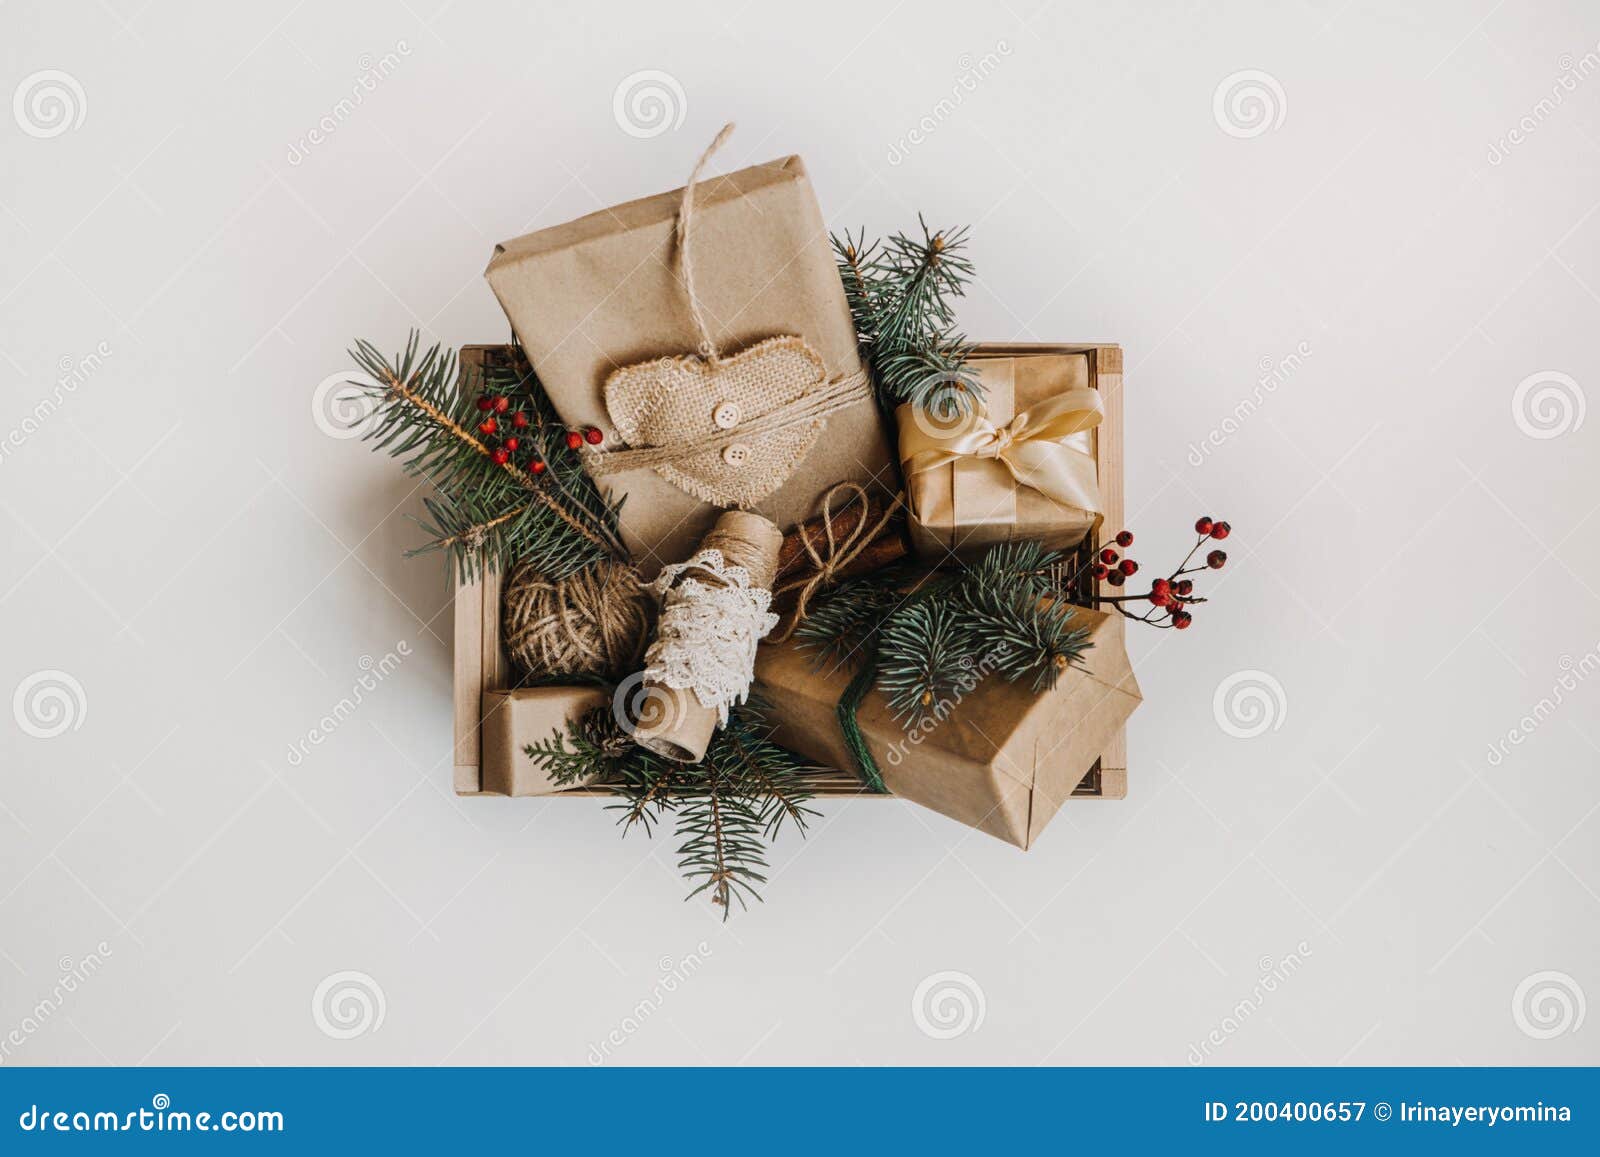 Holiday Gift Ideas. Sustainable Christmas, Zero Waste Gifts ...